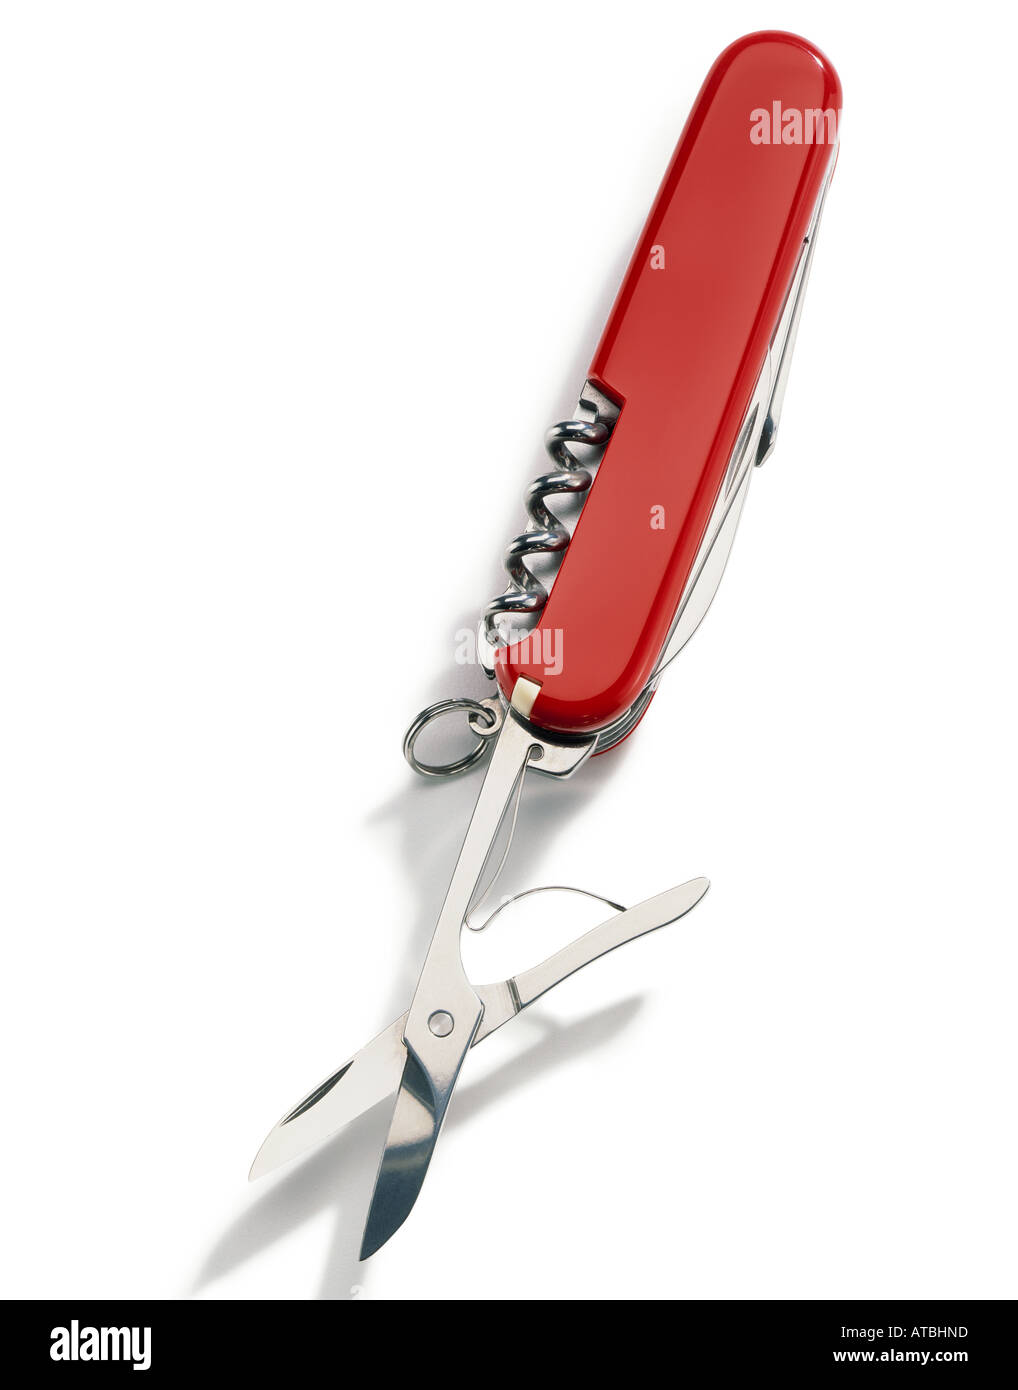 A Swiss army pen knife Stock Photo: 9294876 - Alamy